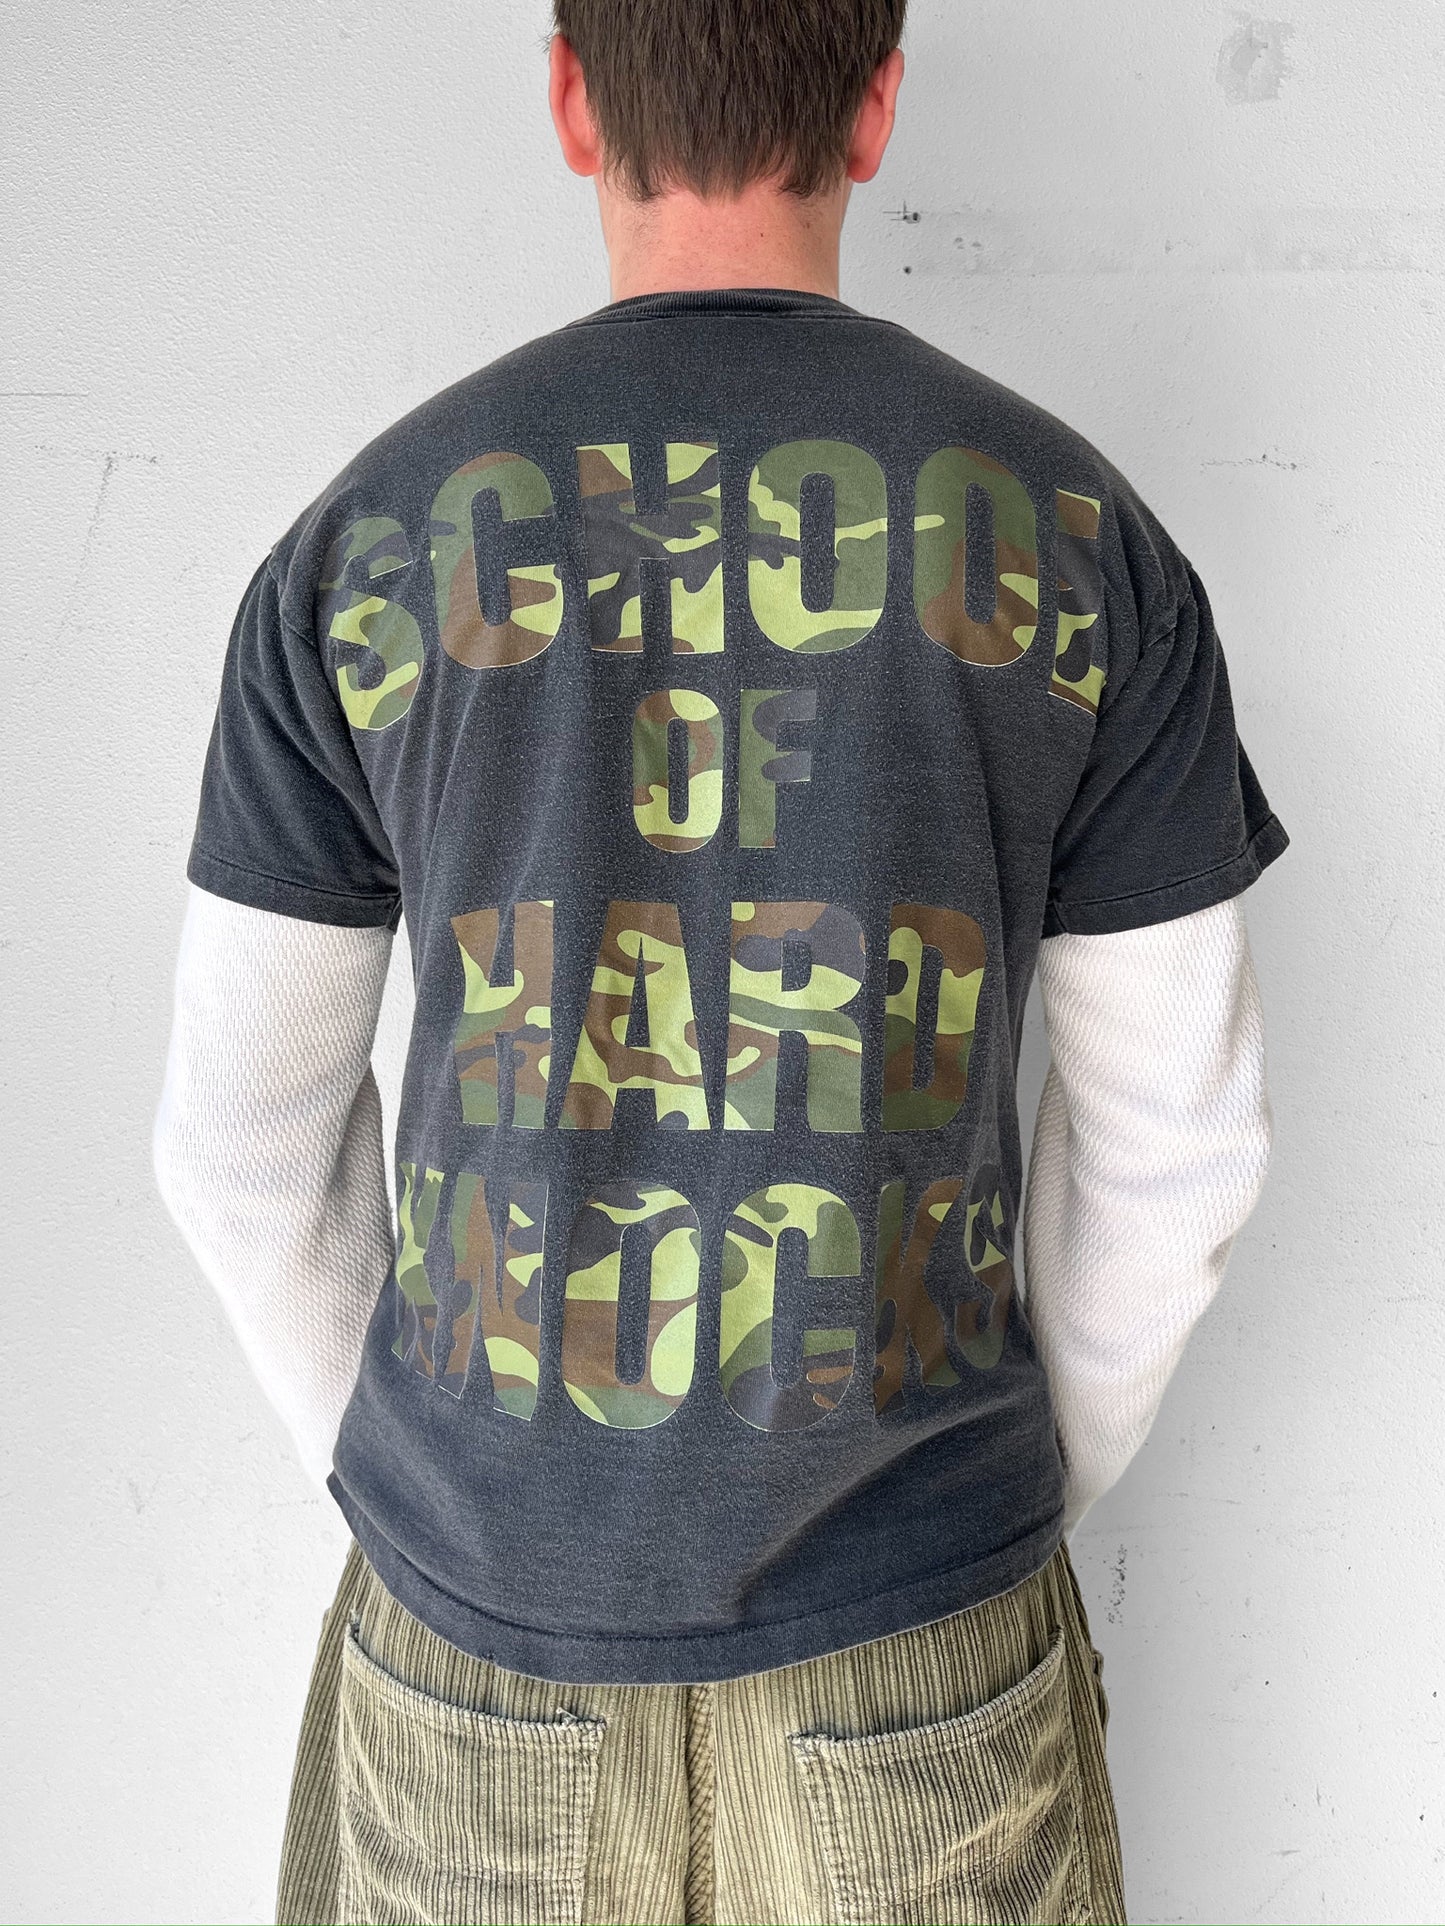 90’s Stone Cold Steve Austin WWE Shirt - M